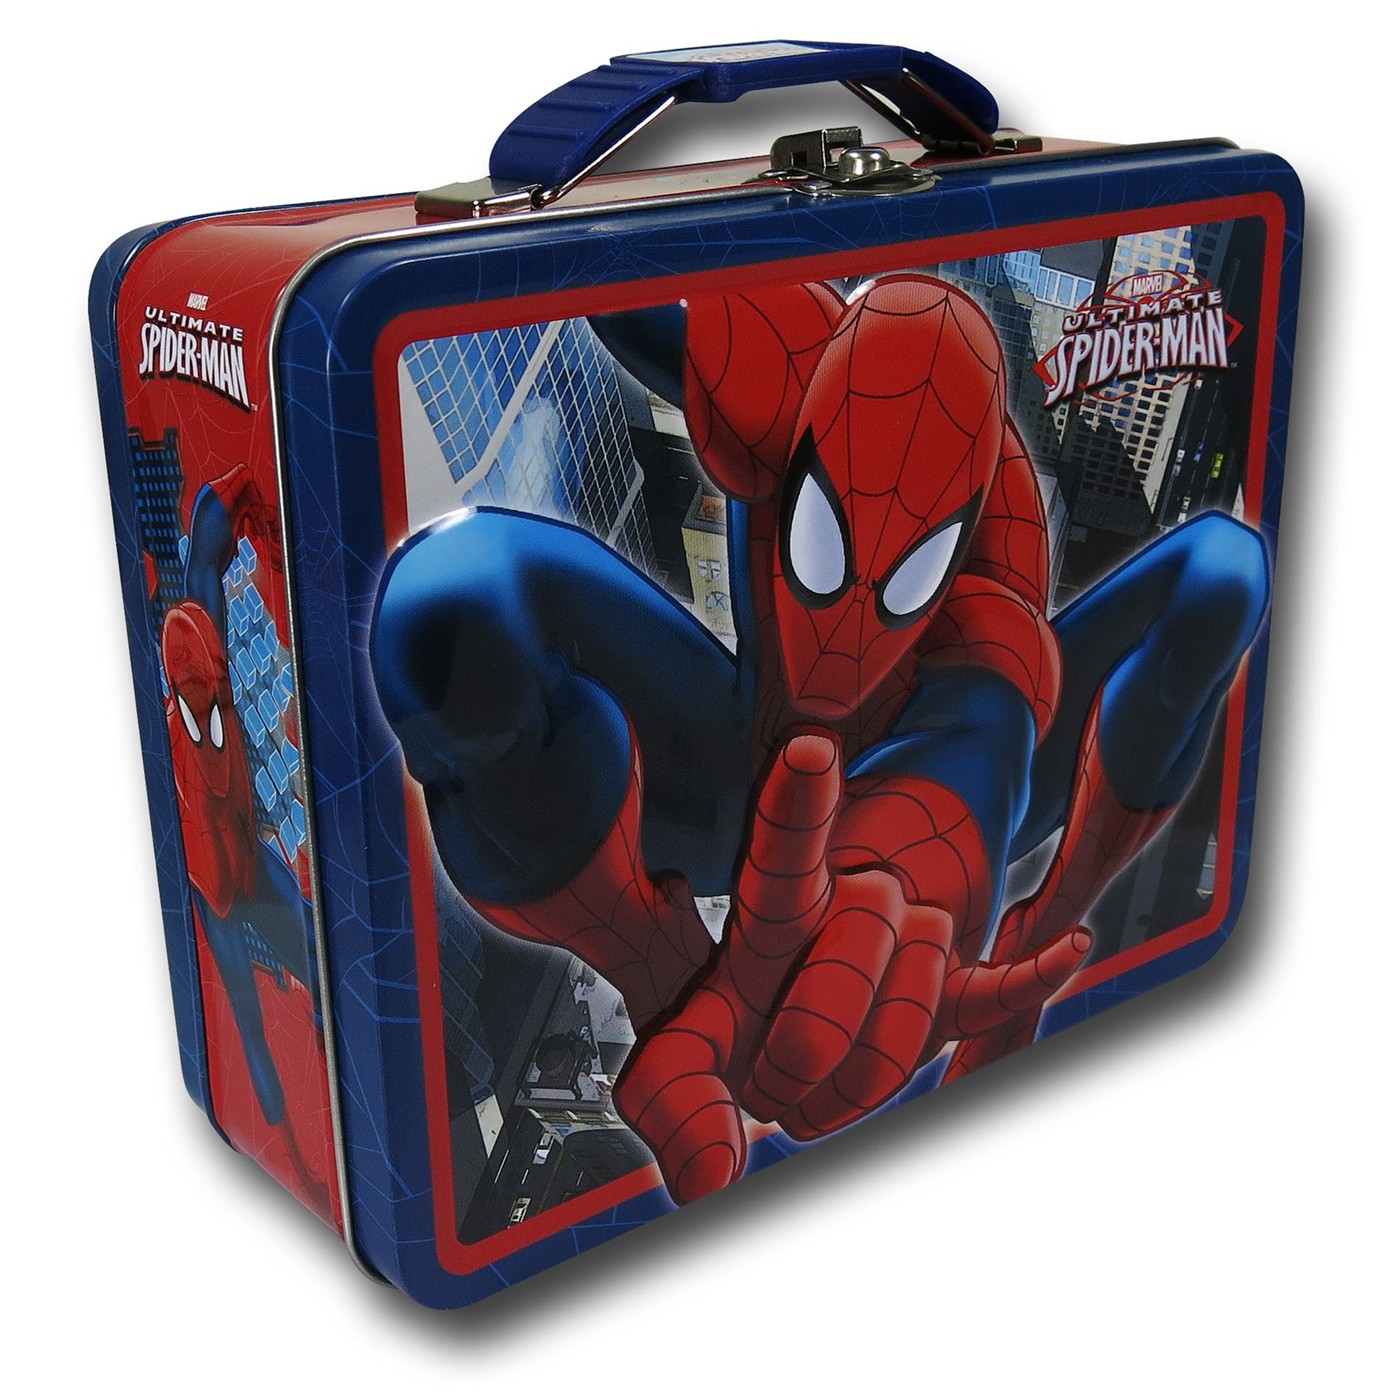 Spiderman Swing Square Tin Lunchbox